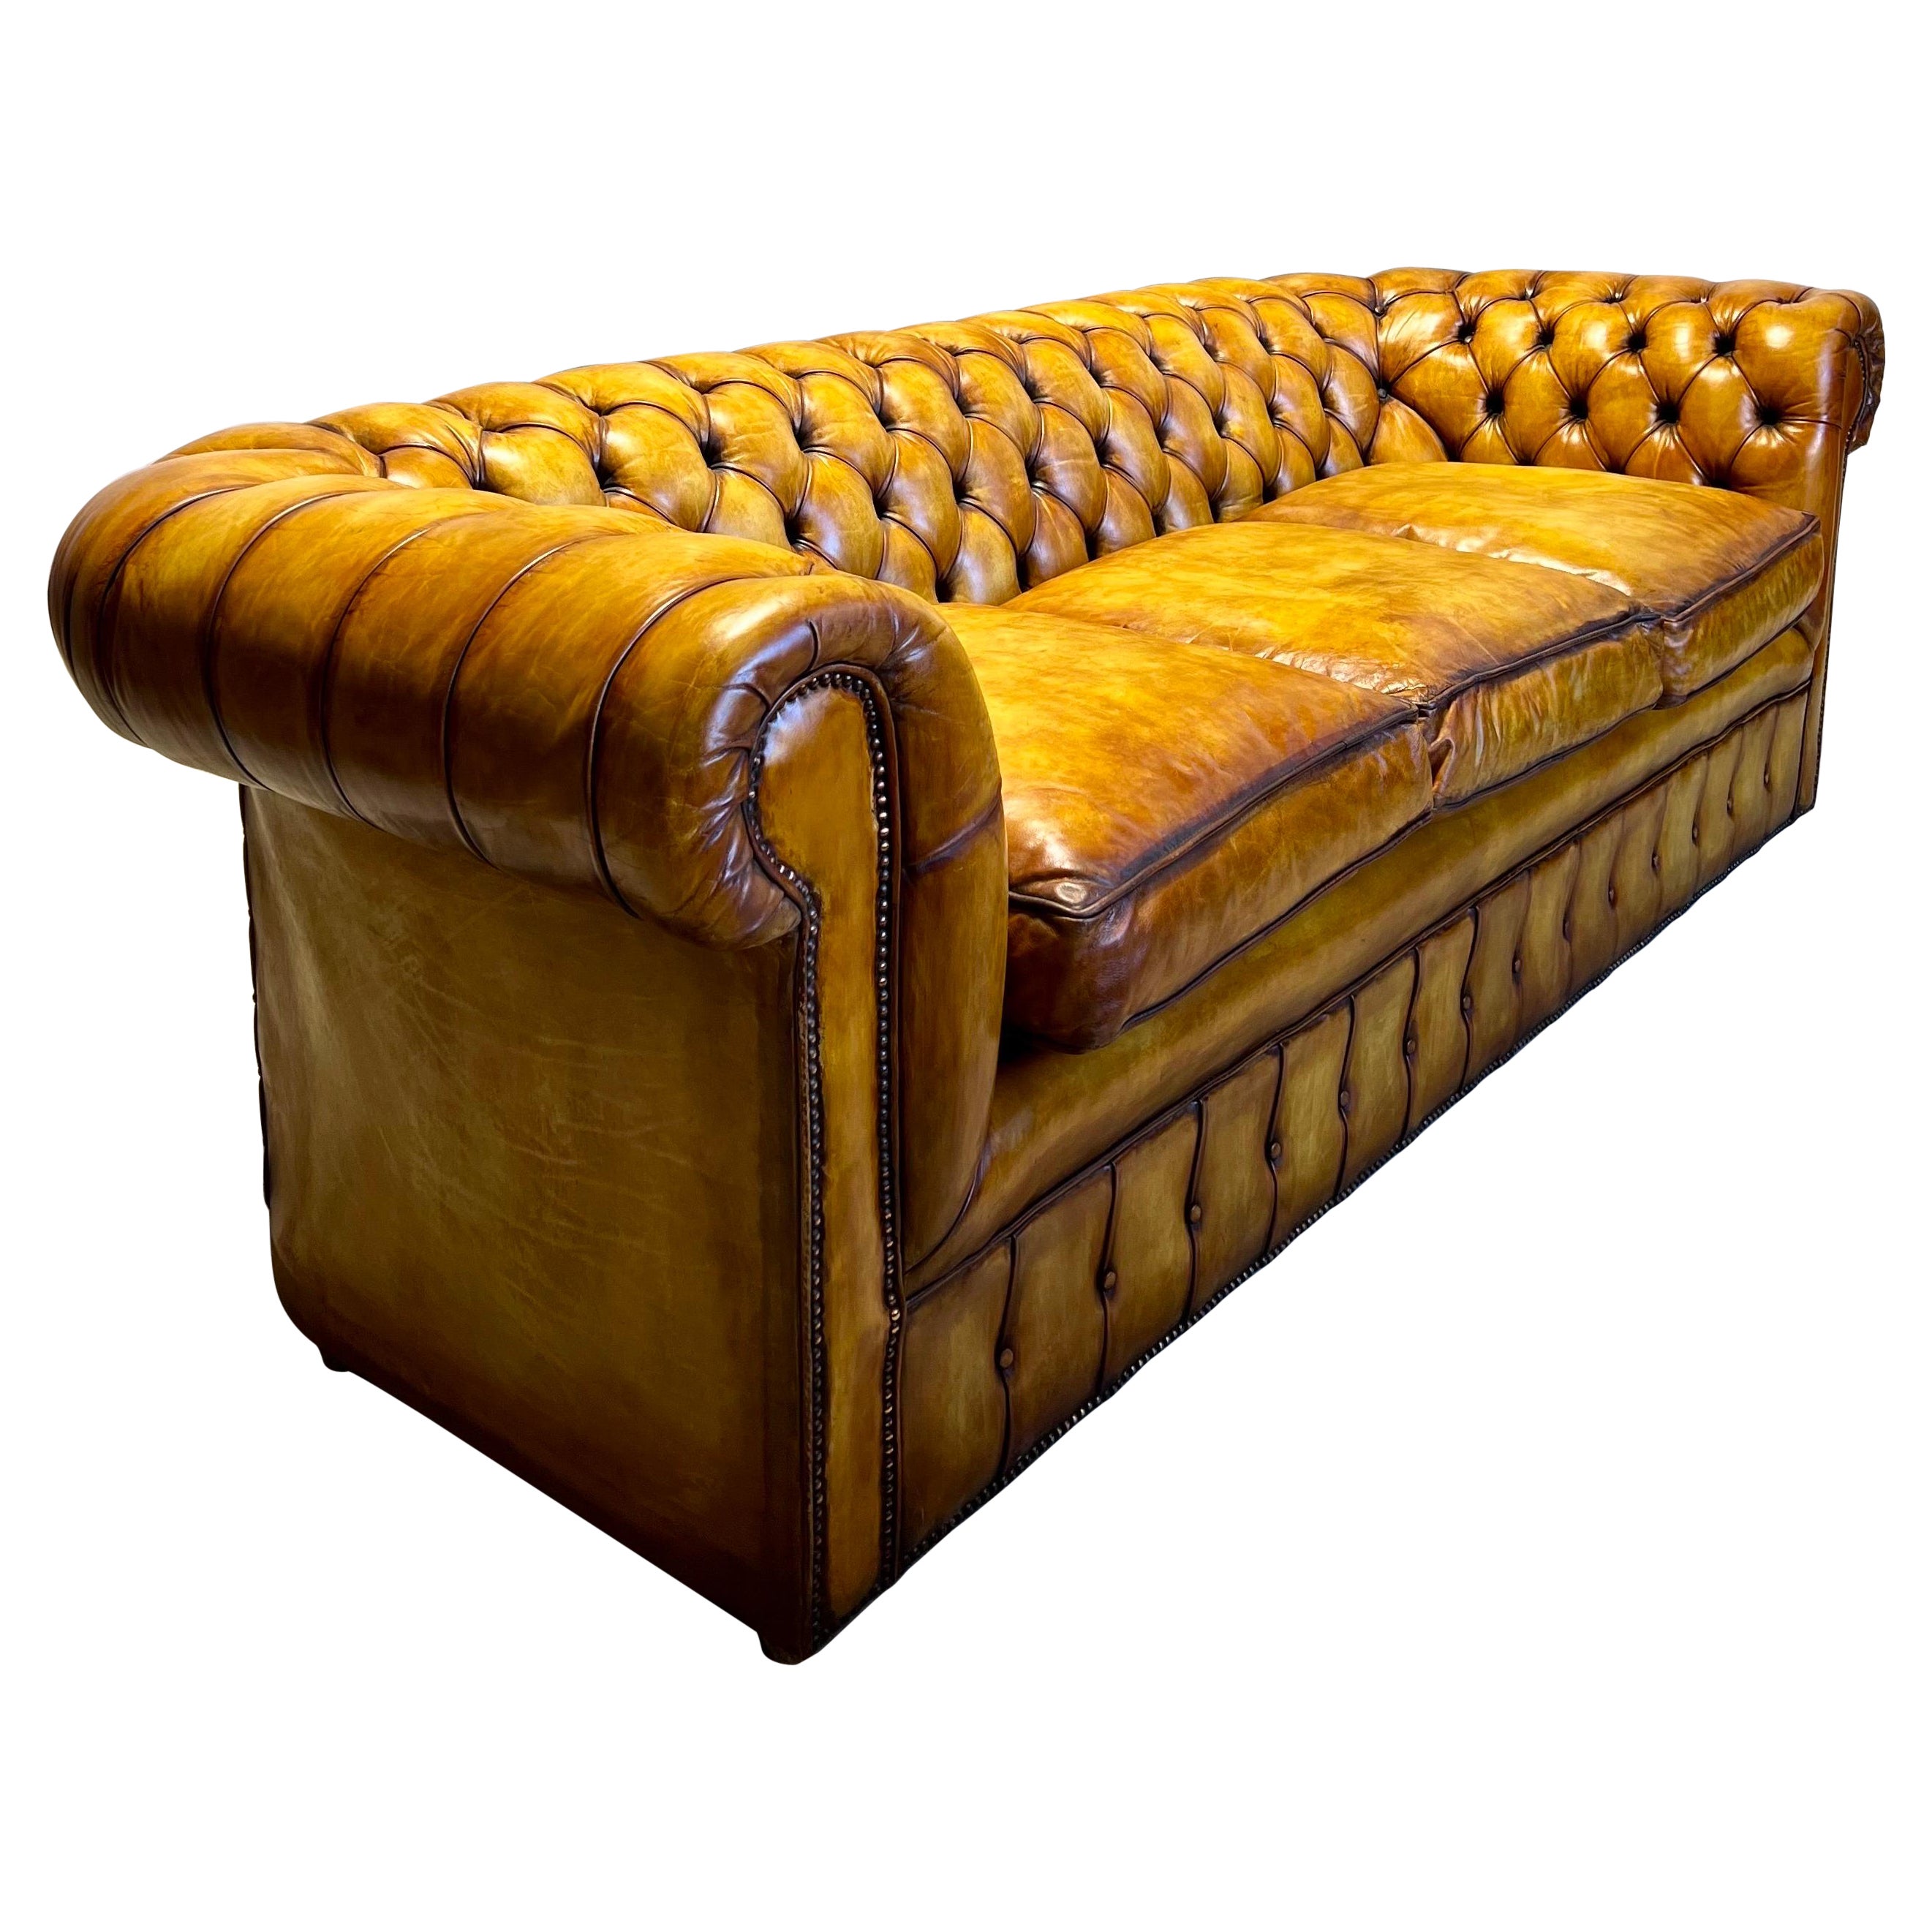 Schönes MidC Leder Chesterfield Sofa in handgefärbtem Golden Tans